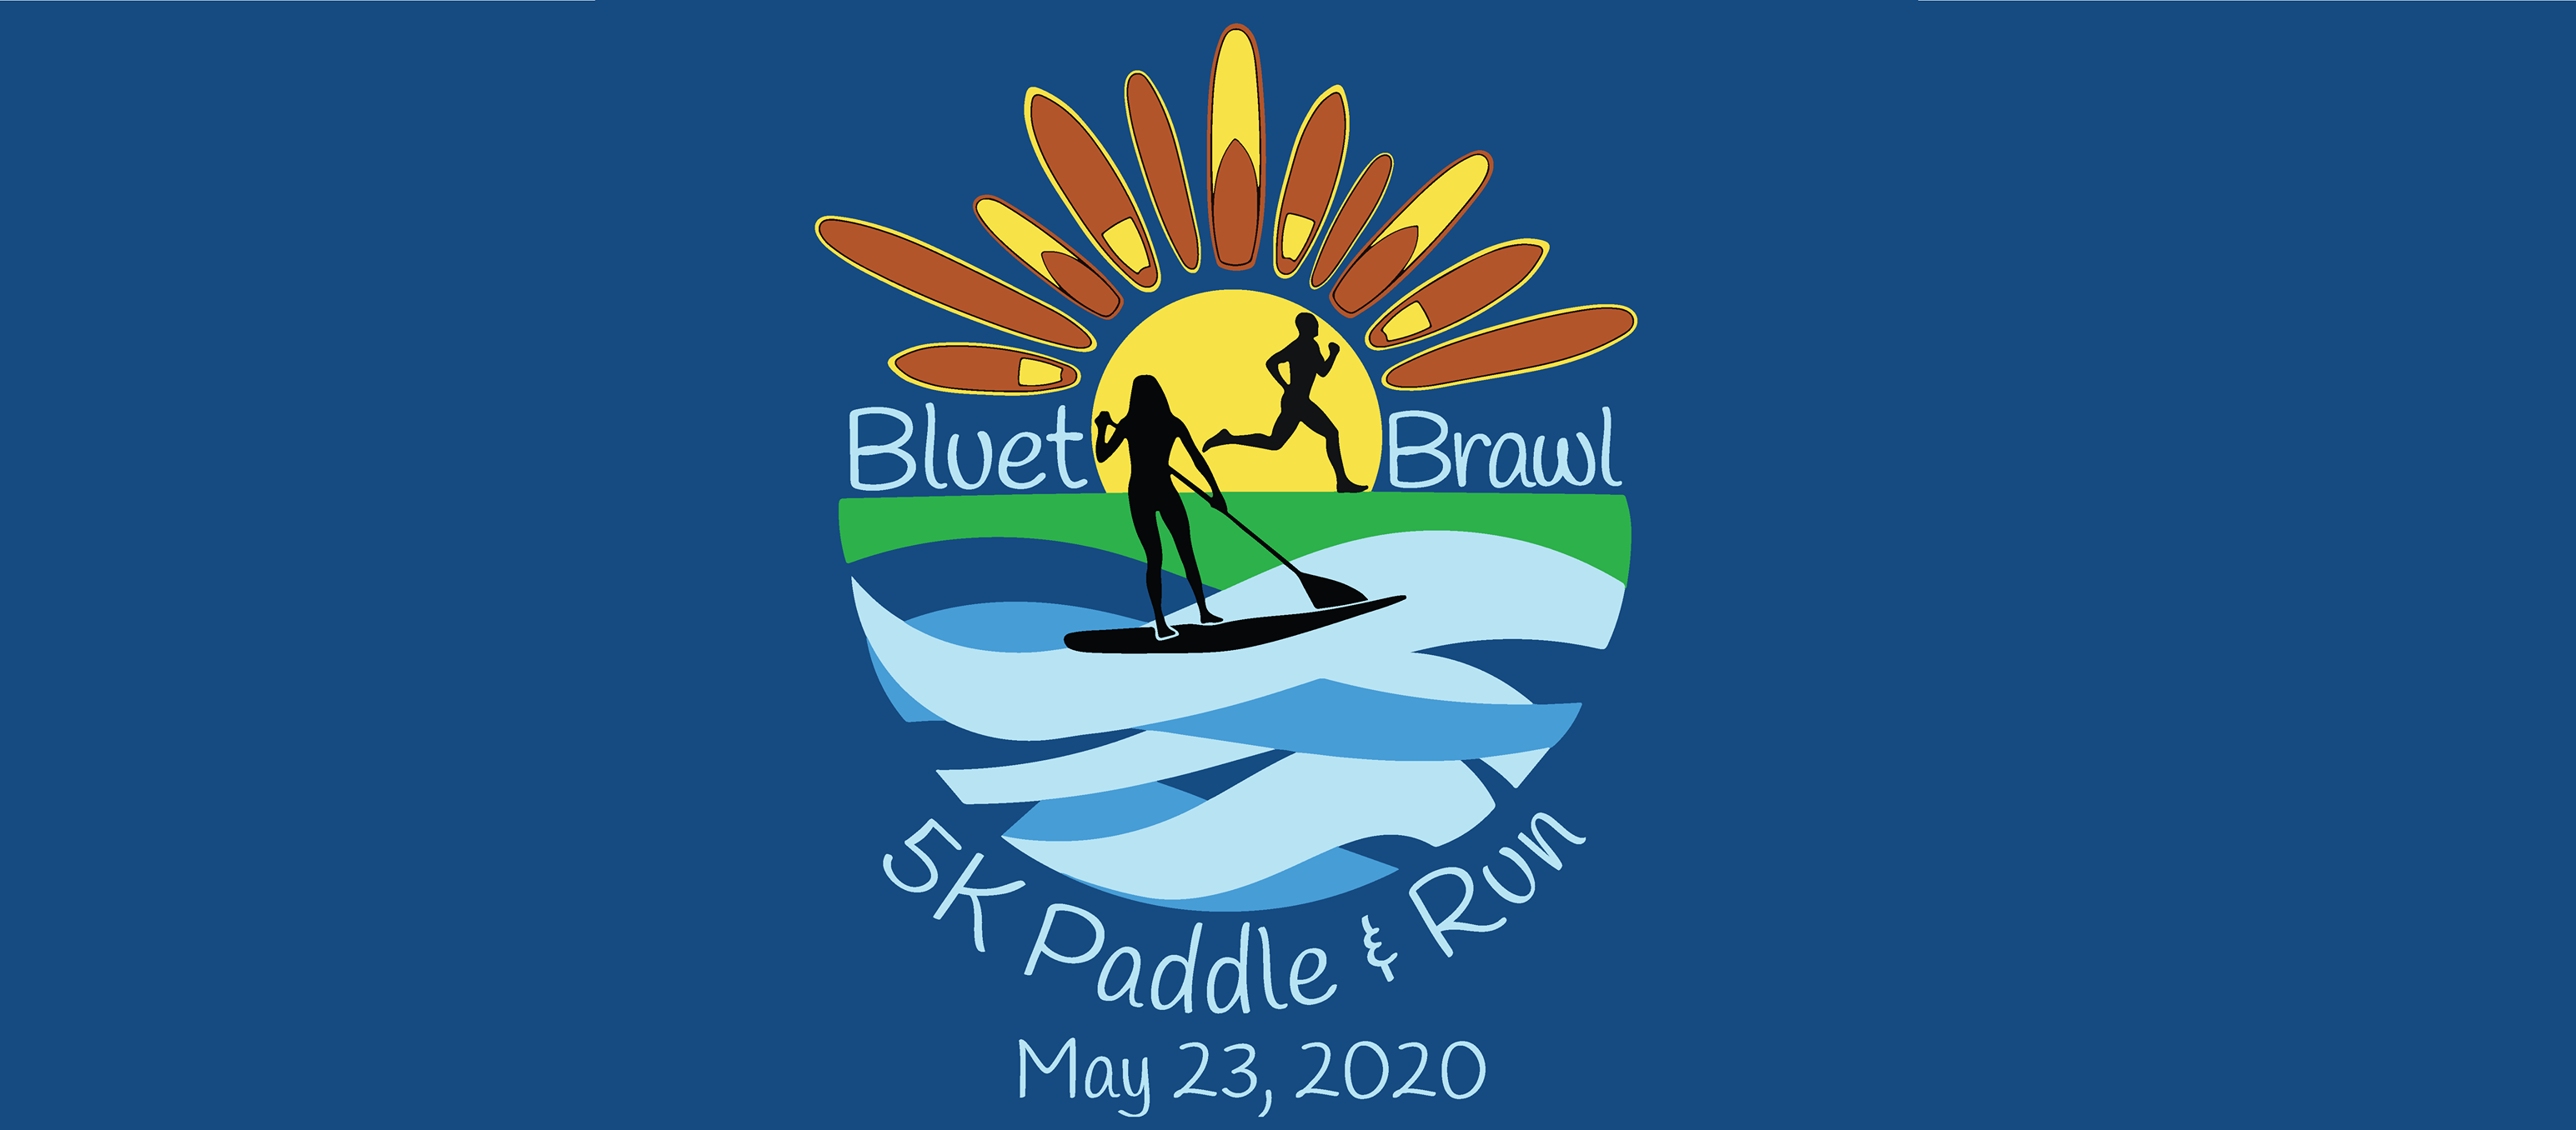 Bluet Brawl 5K Paddle & Run logo on RaceRaves